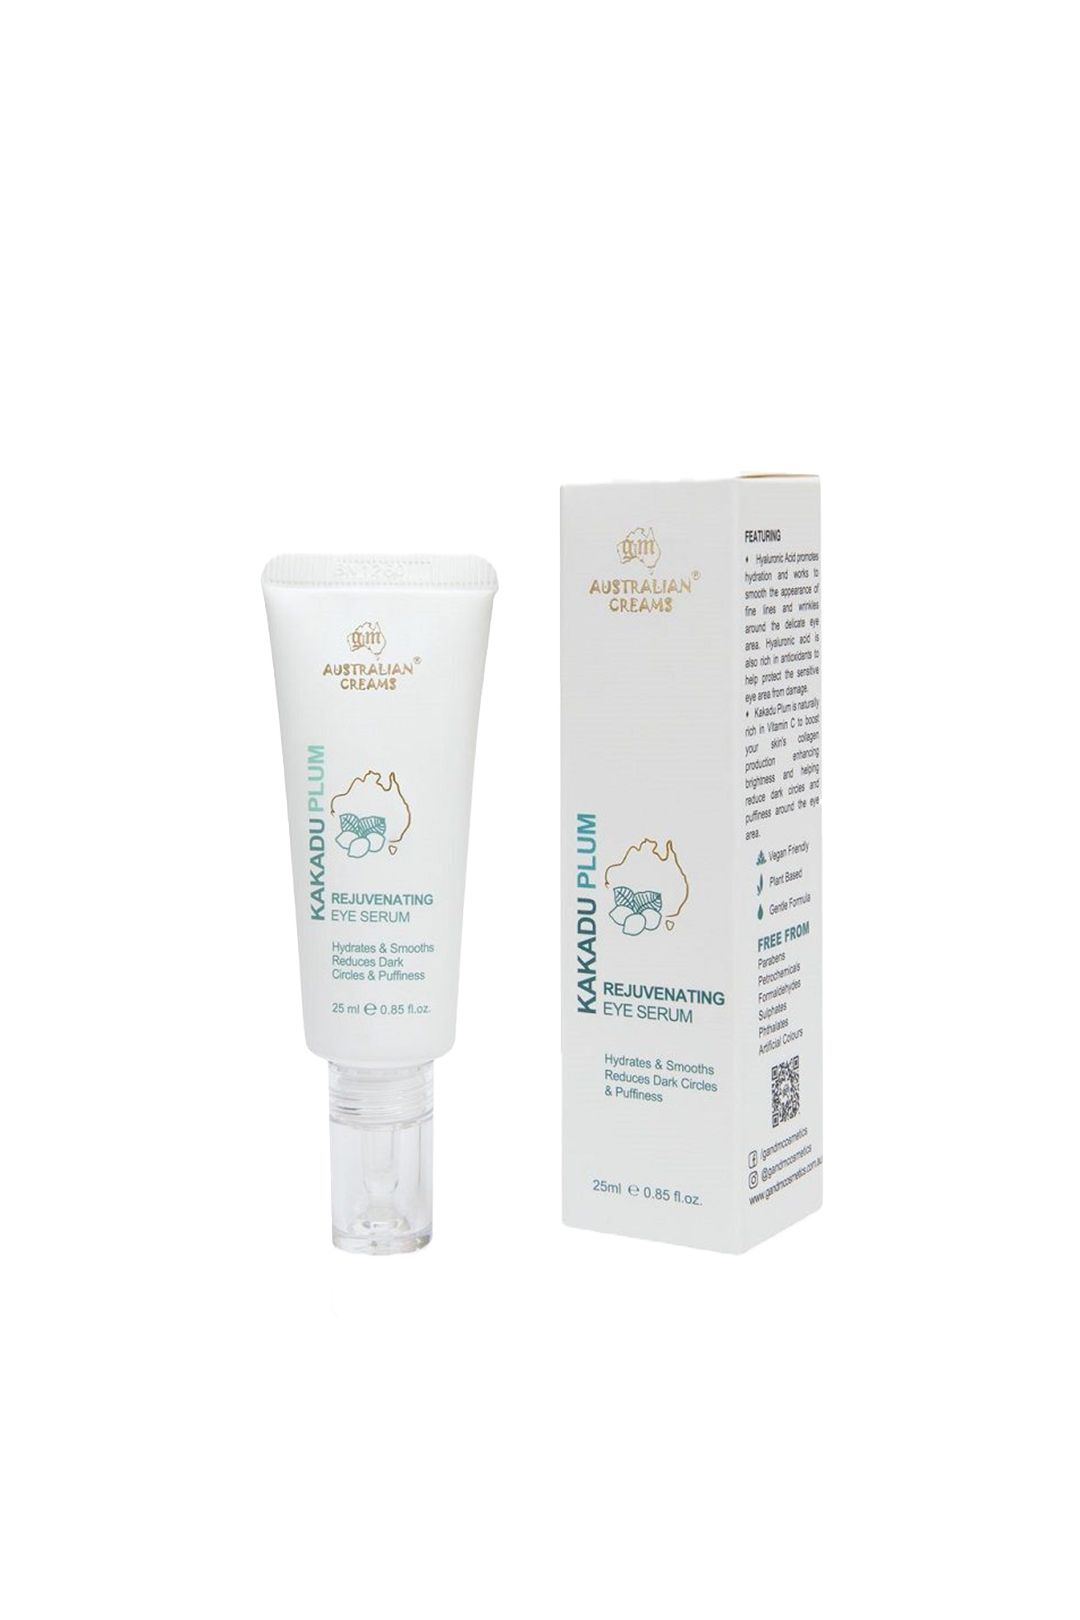 G-and-M-Cosmetics-Australian-CreamsKakadu-Plum-Rejuvenating-Eye-Serum-Product